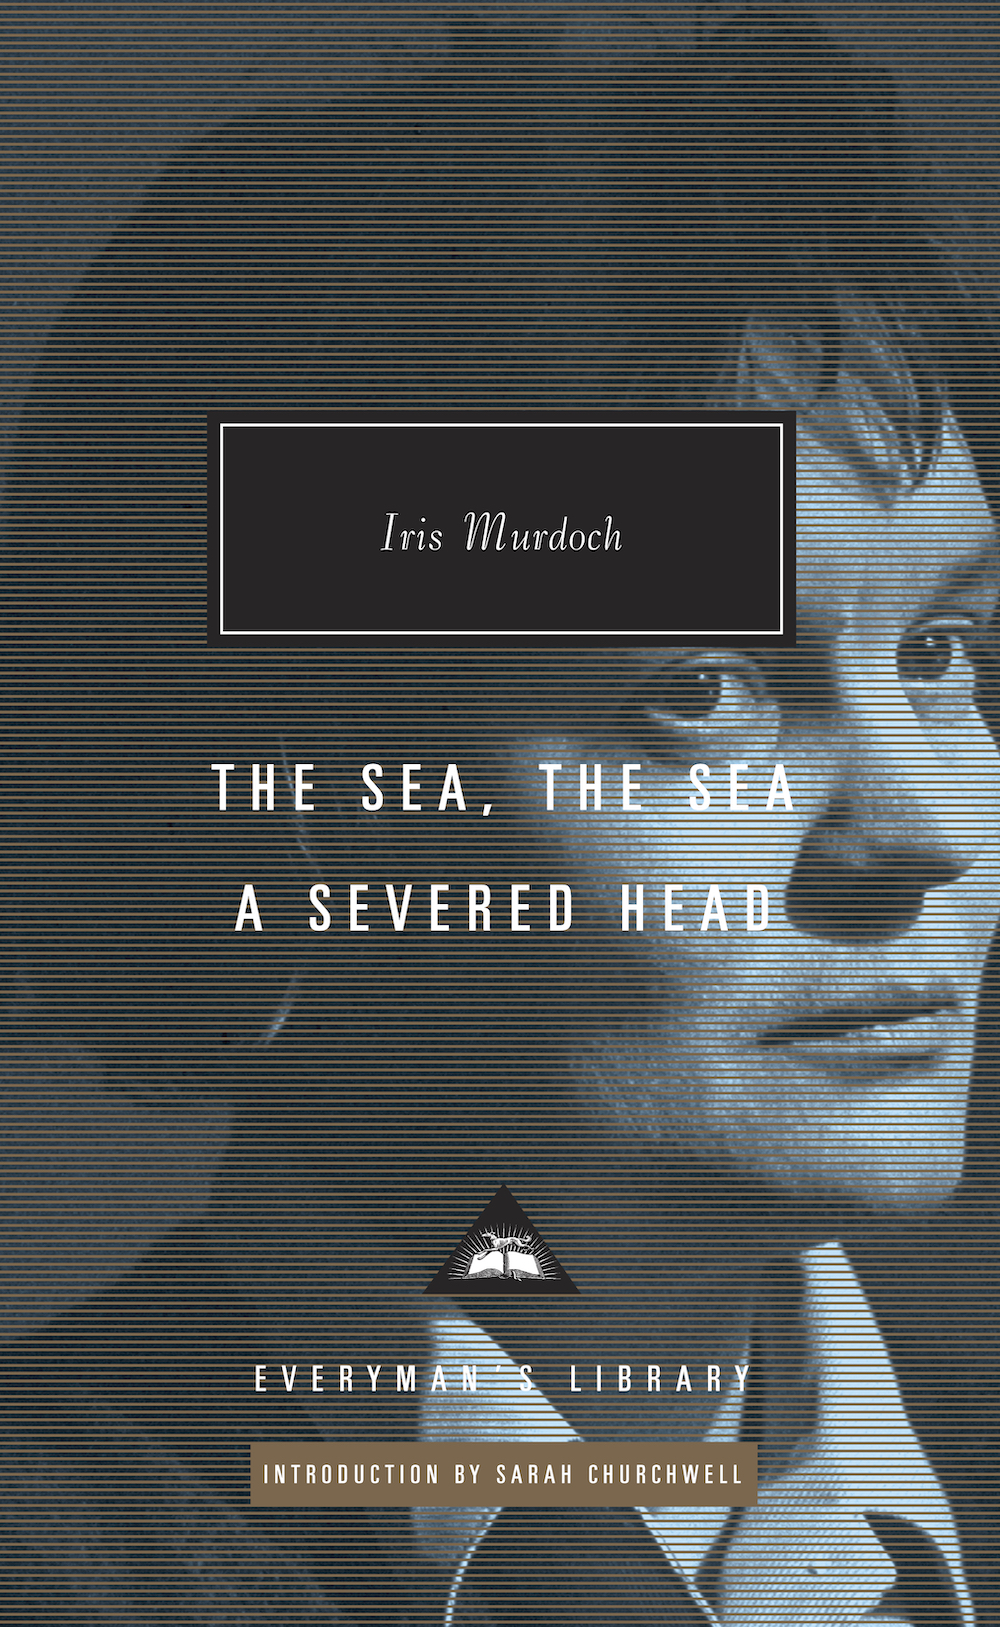 The Sea, The Sea and A Severed Head